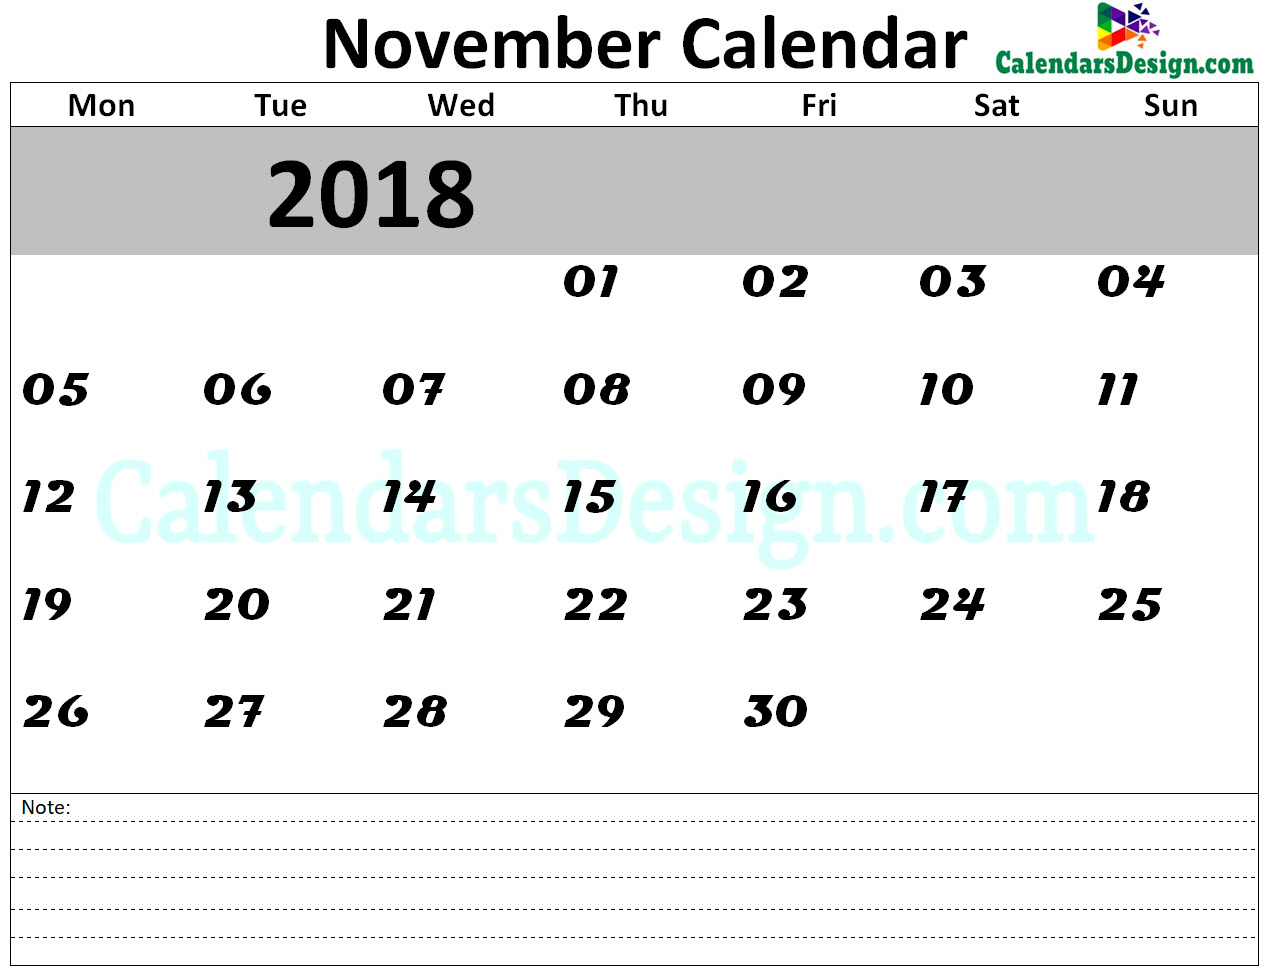 November Calendar 2018 Template